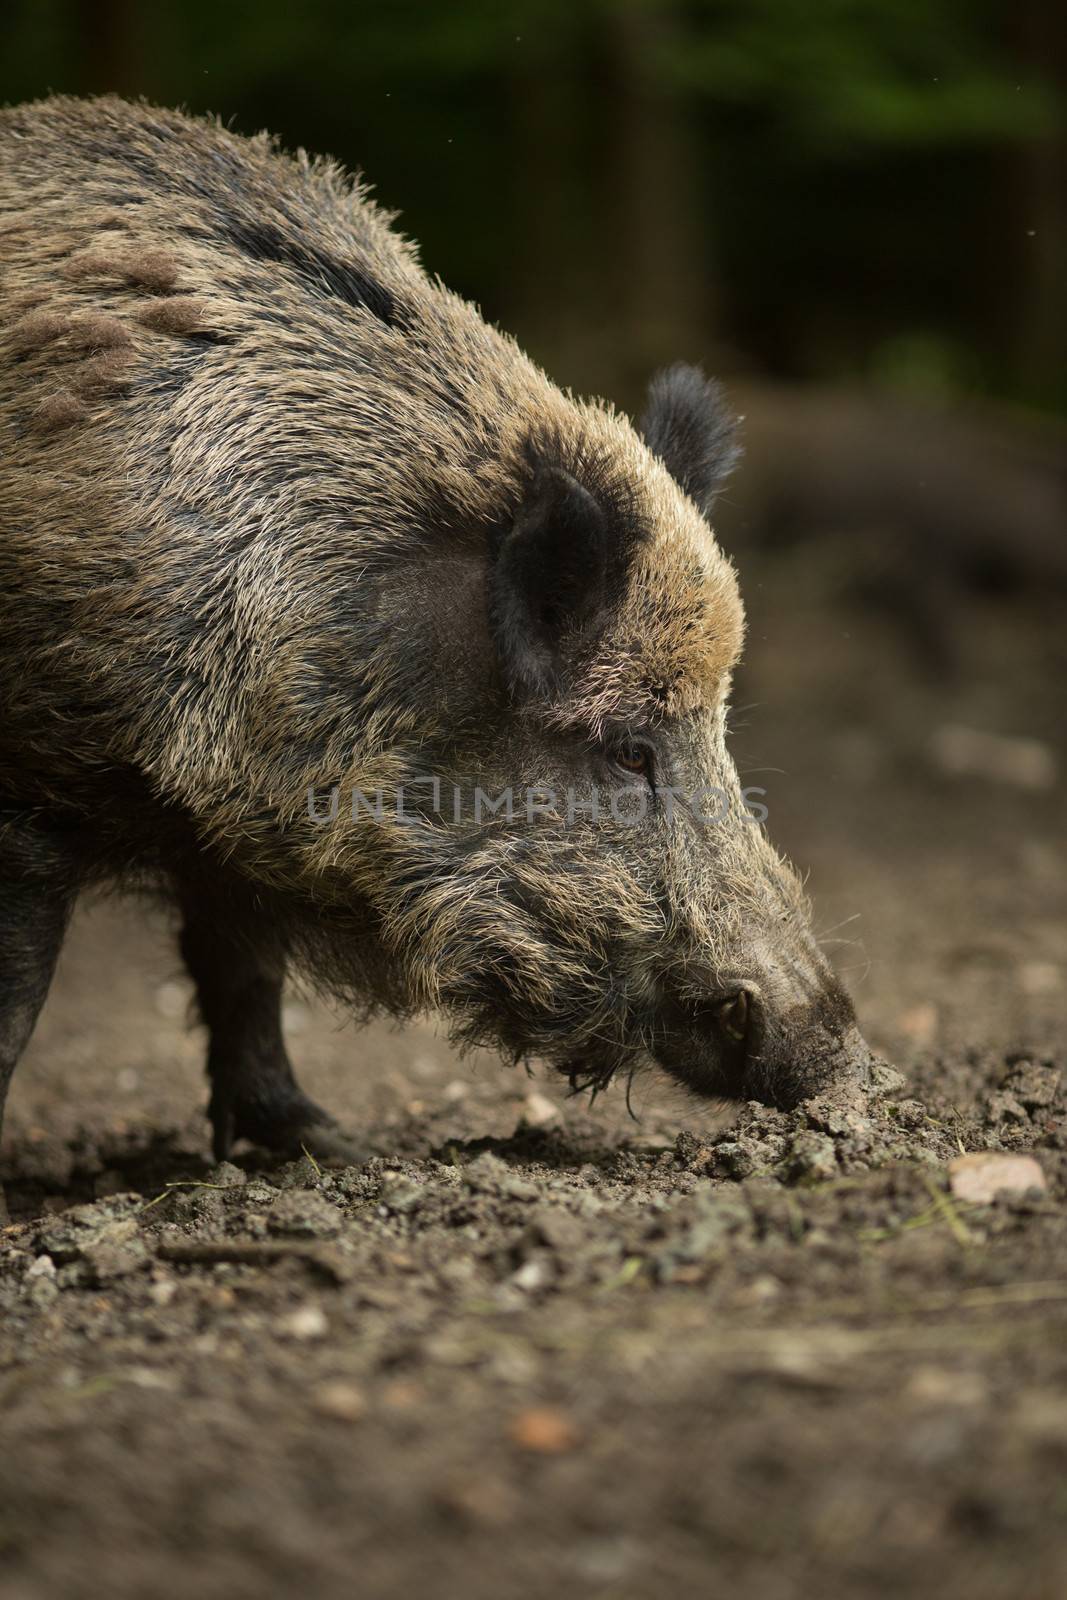 Wild boar (Sus scrofa) by viktor_cap